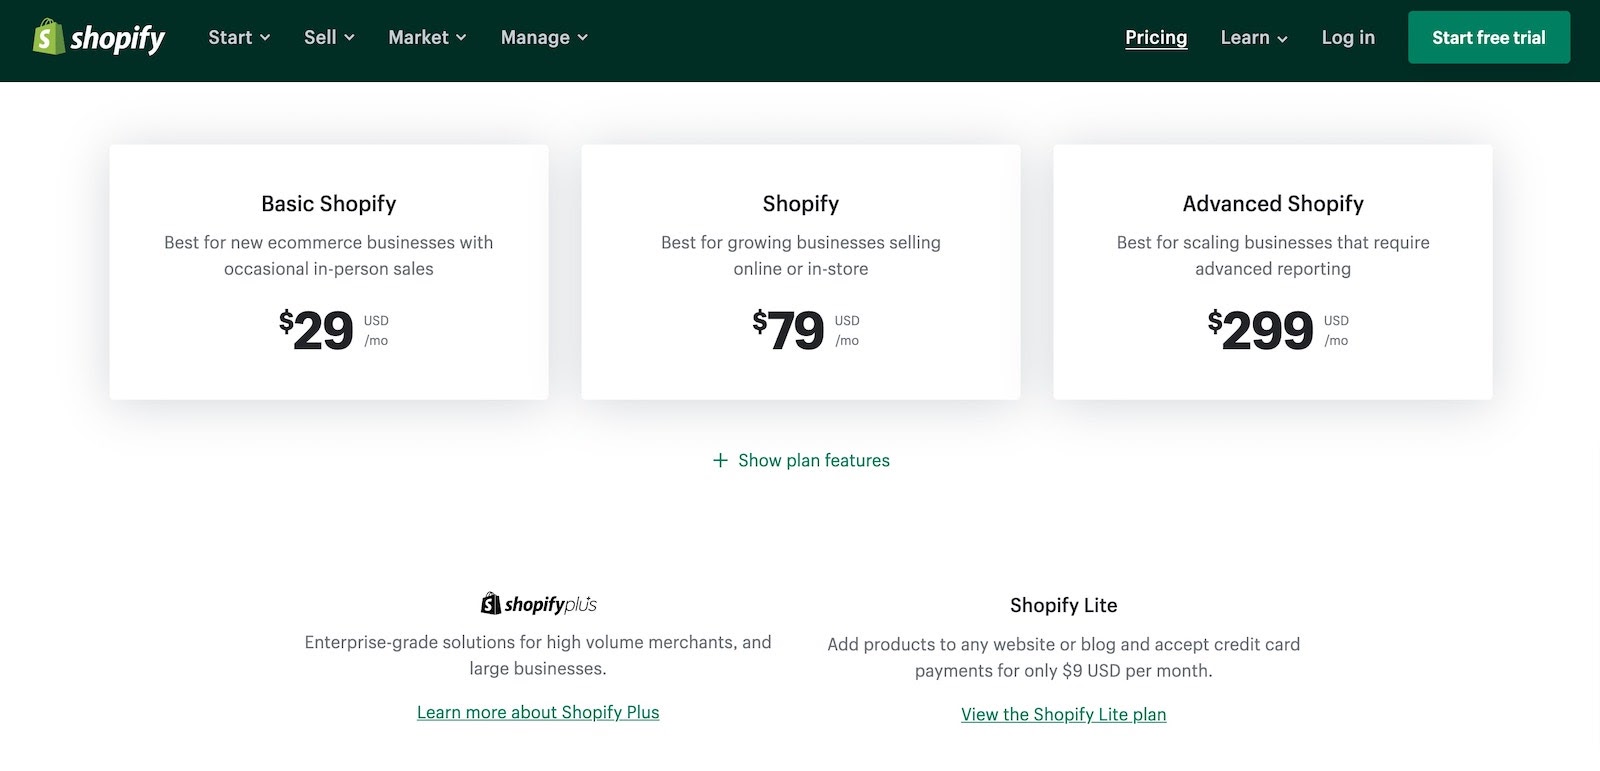 shopify pricing plans small biz to enterprise